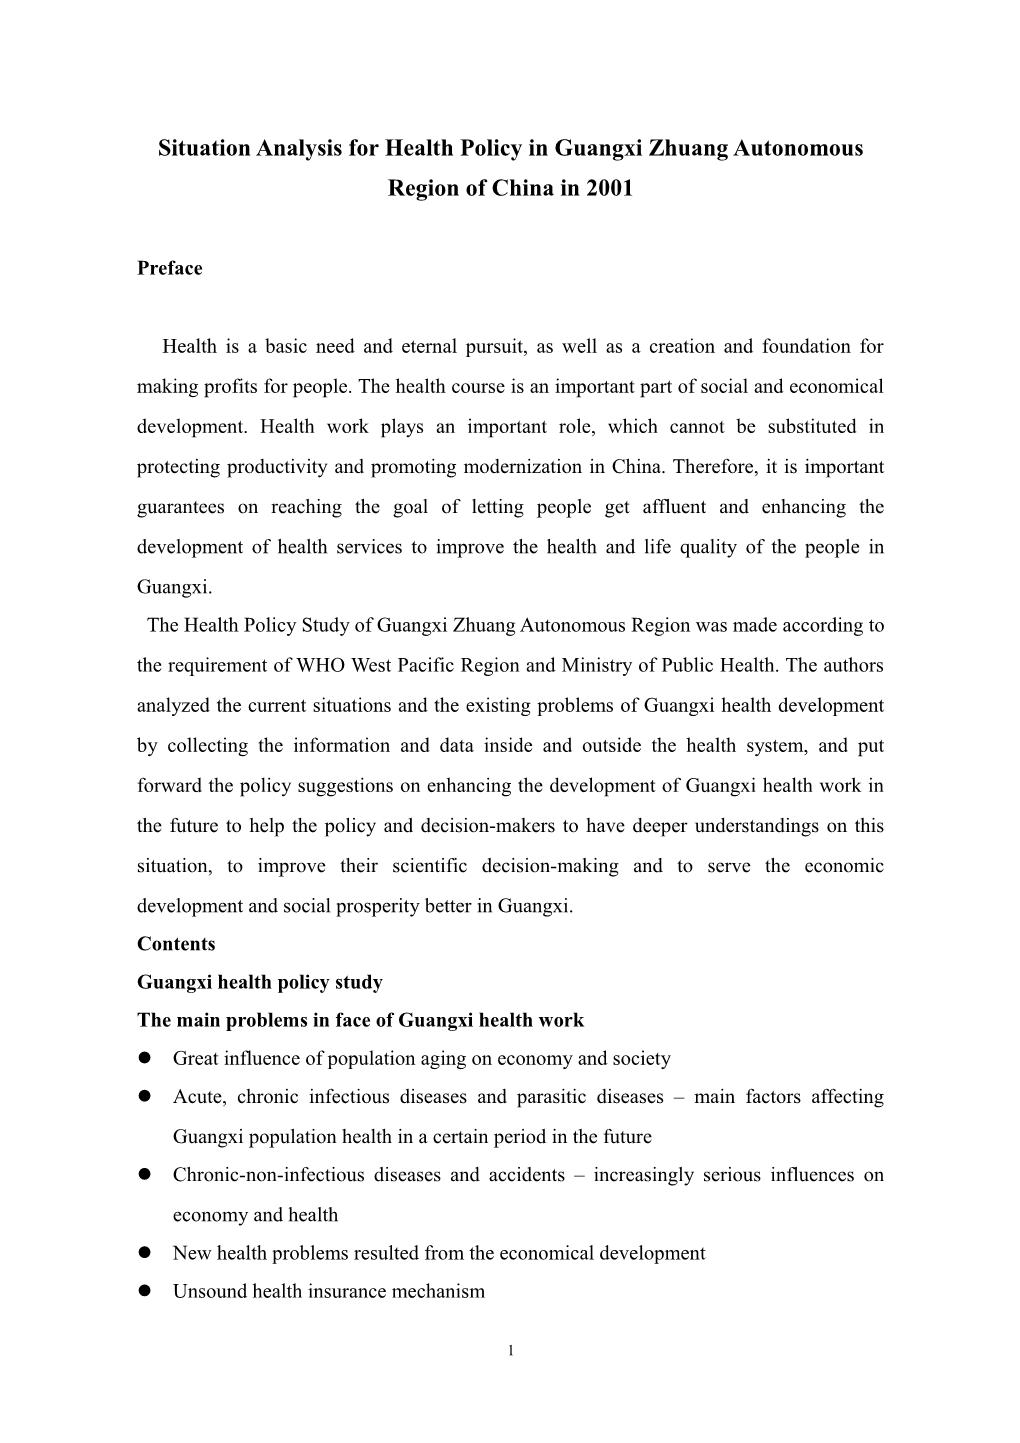 Health Policy Study